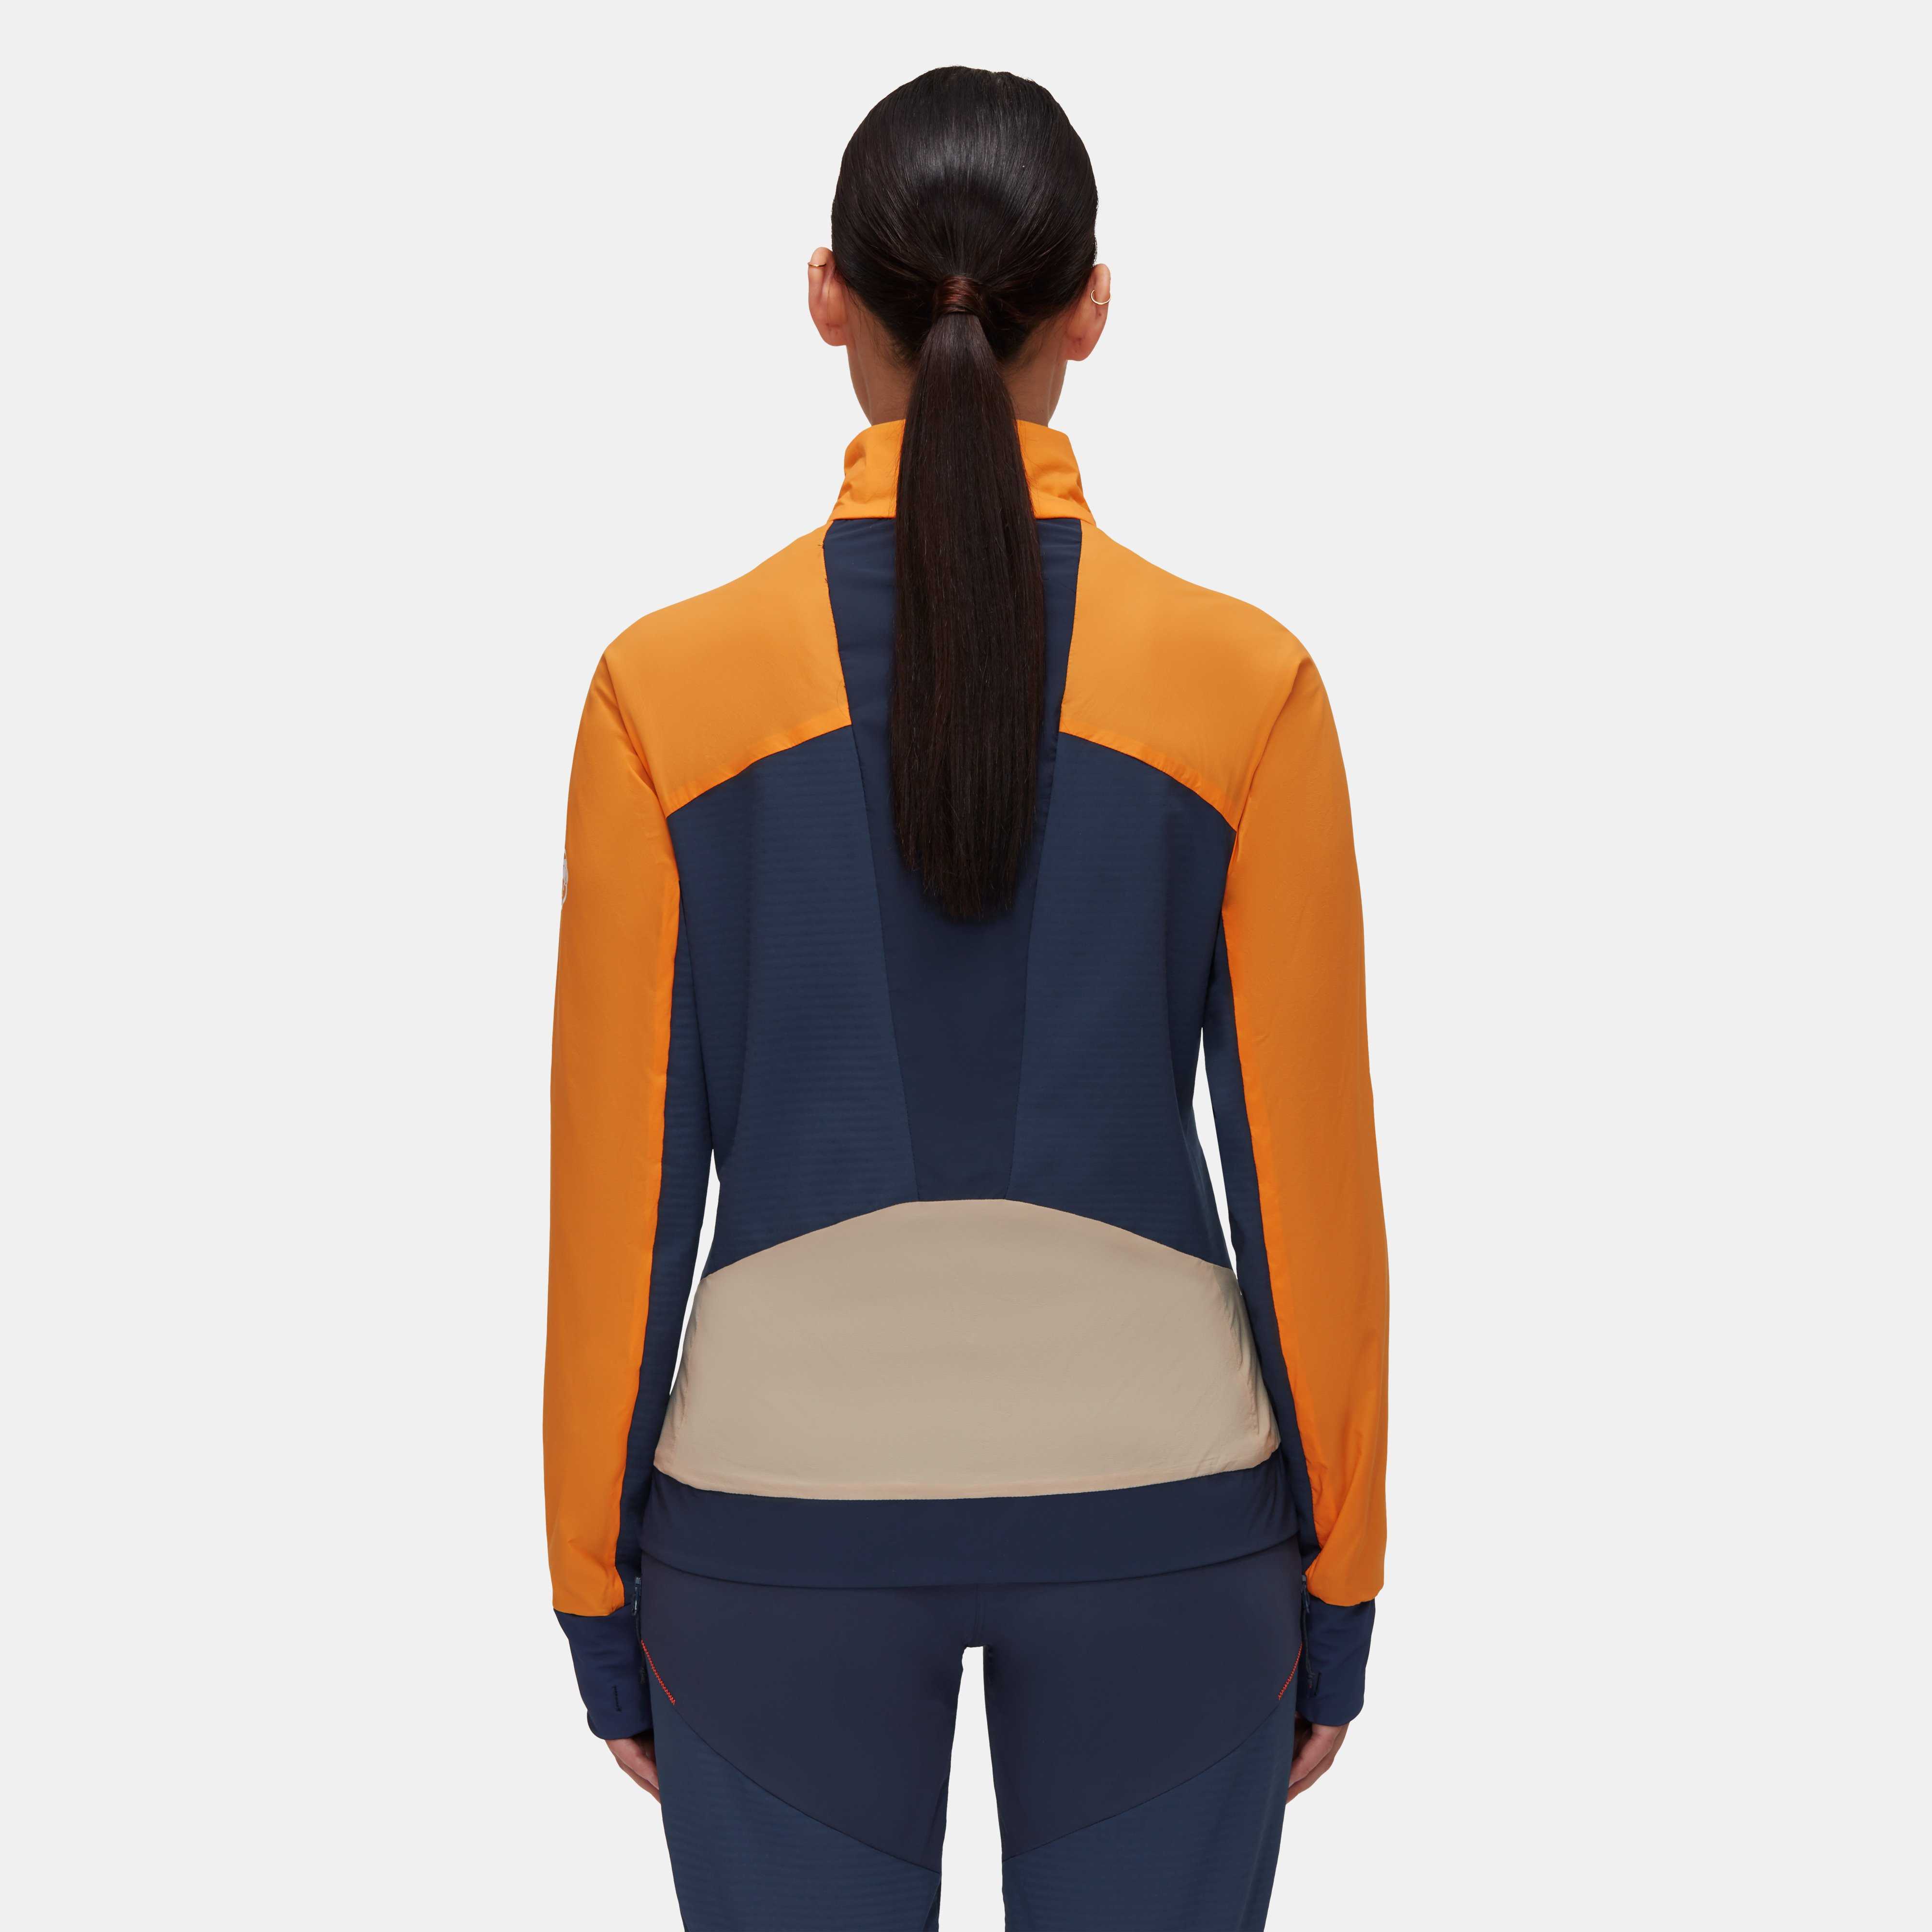 Tangerine Womens Zip Up Athletic Jacket Long Sleeve/Thumb Holes Small Green